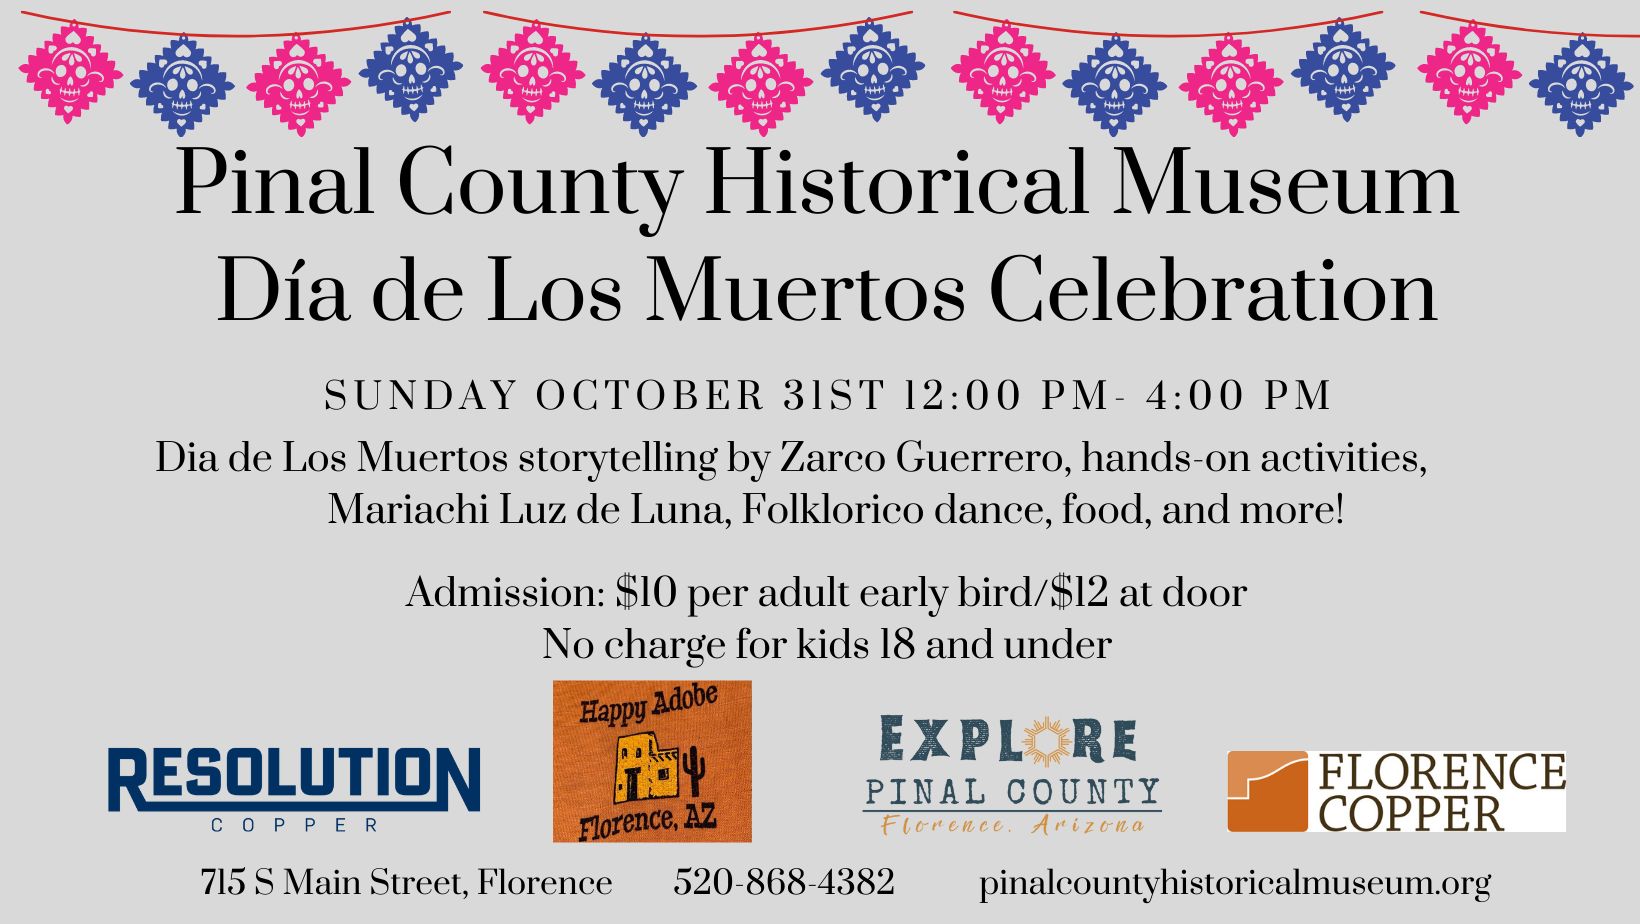 Dia de Los Muertos Celebration with Zarco Guerrero, Florence, Arizona, United States